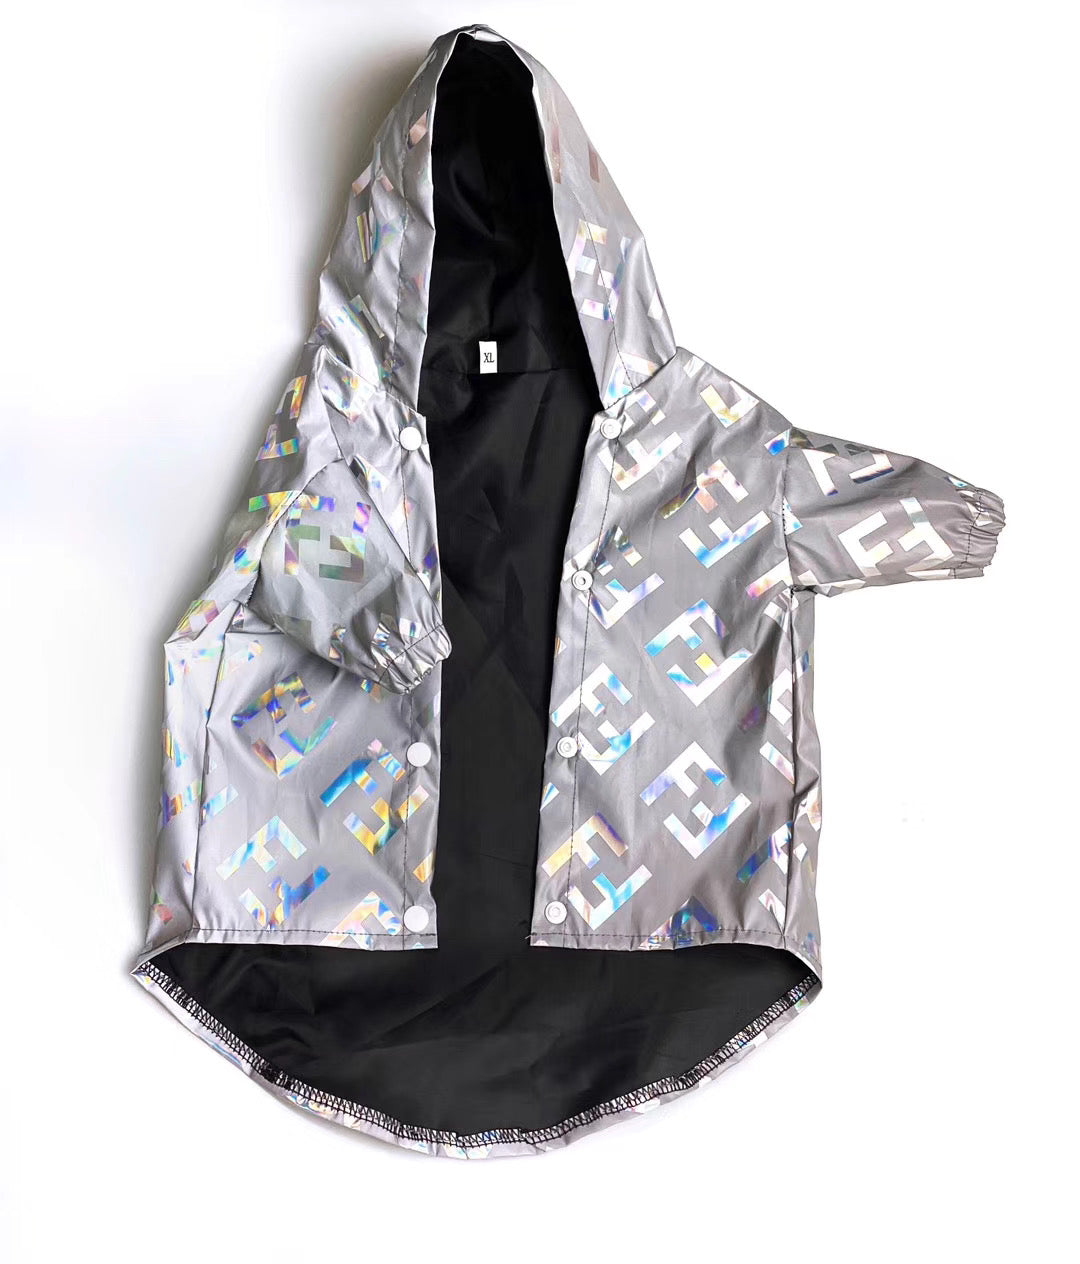 FENDI Reflective Outdoor Jacket Windbreaker Waterproof Raincoat for dog